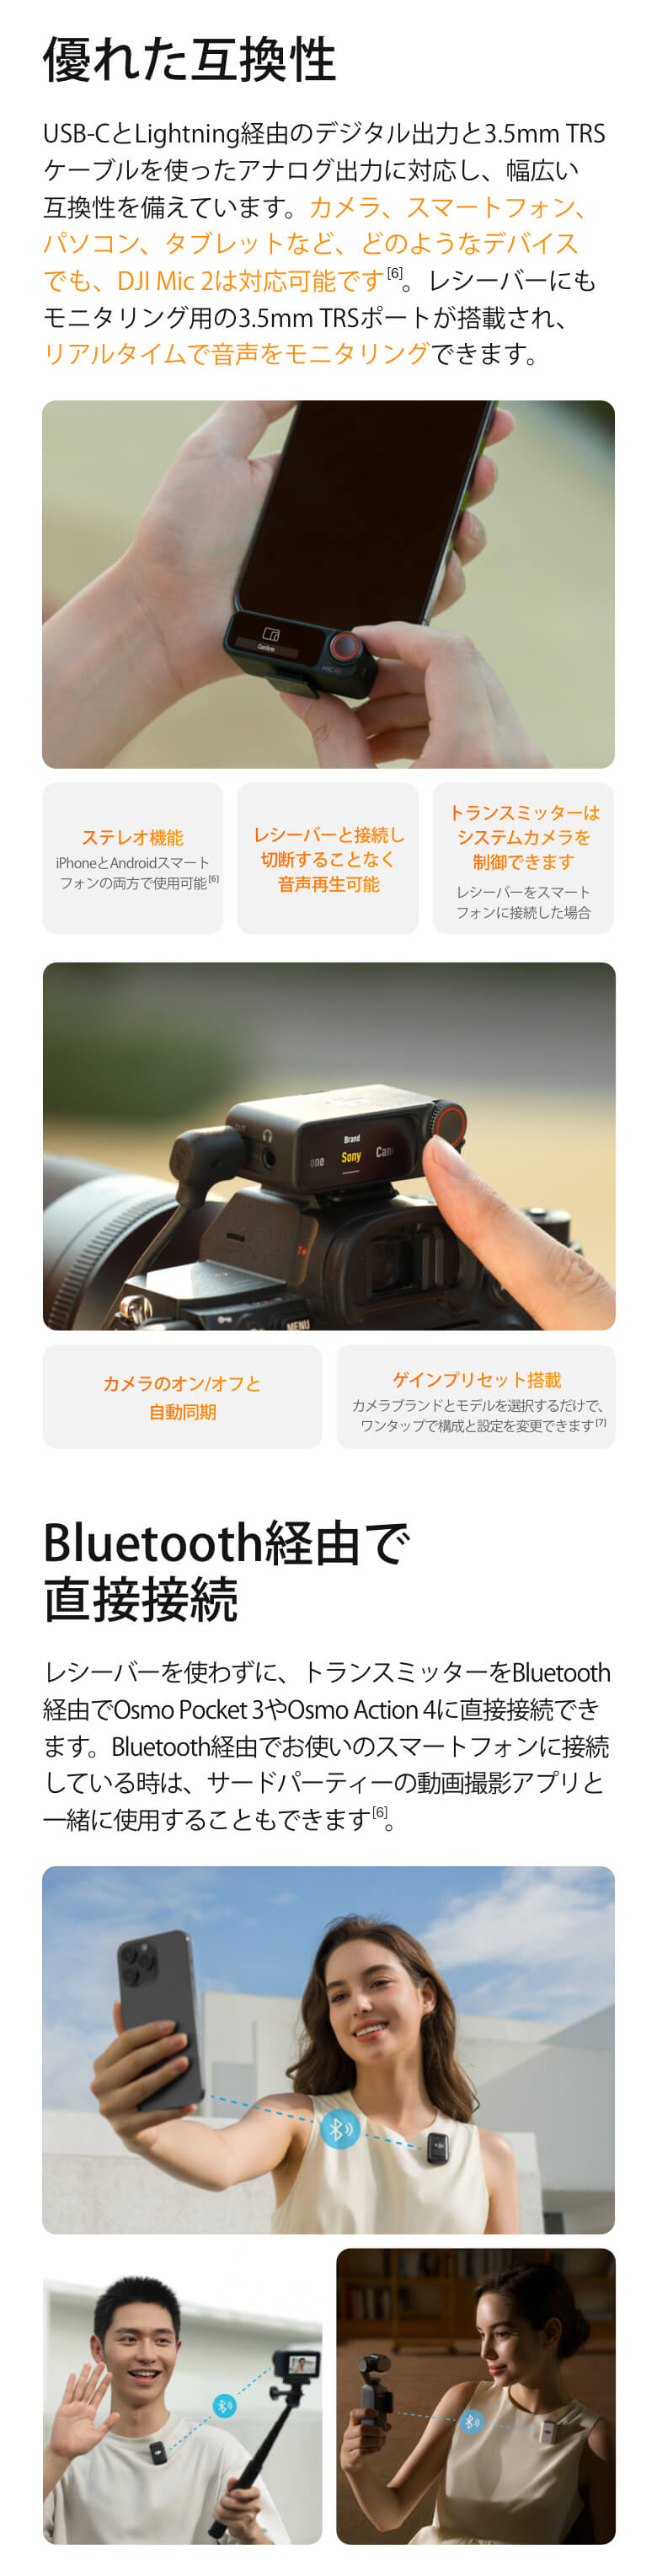 Bluetooth経由で直接接続